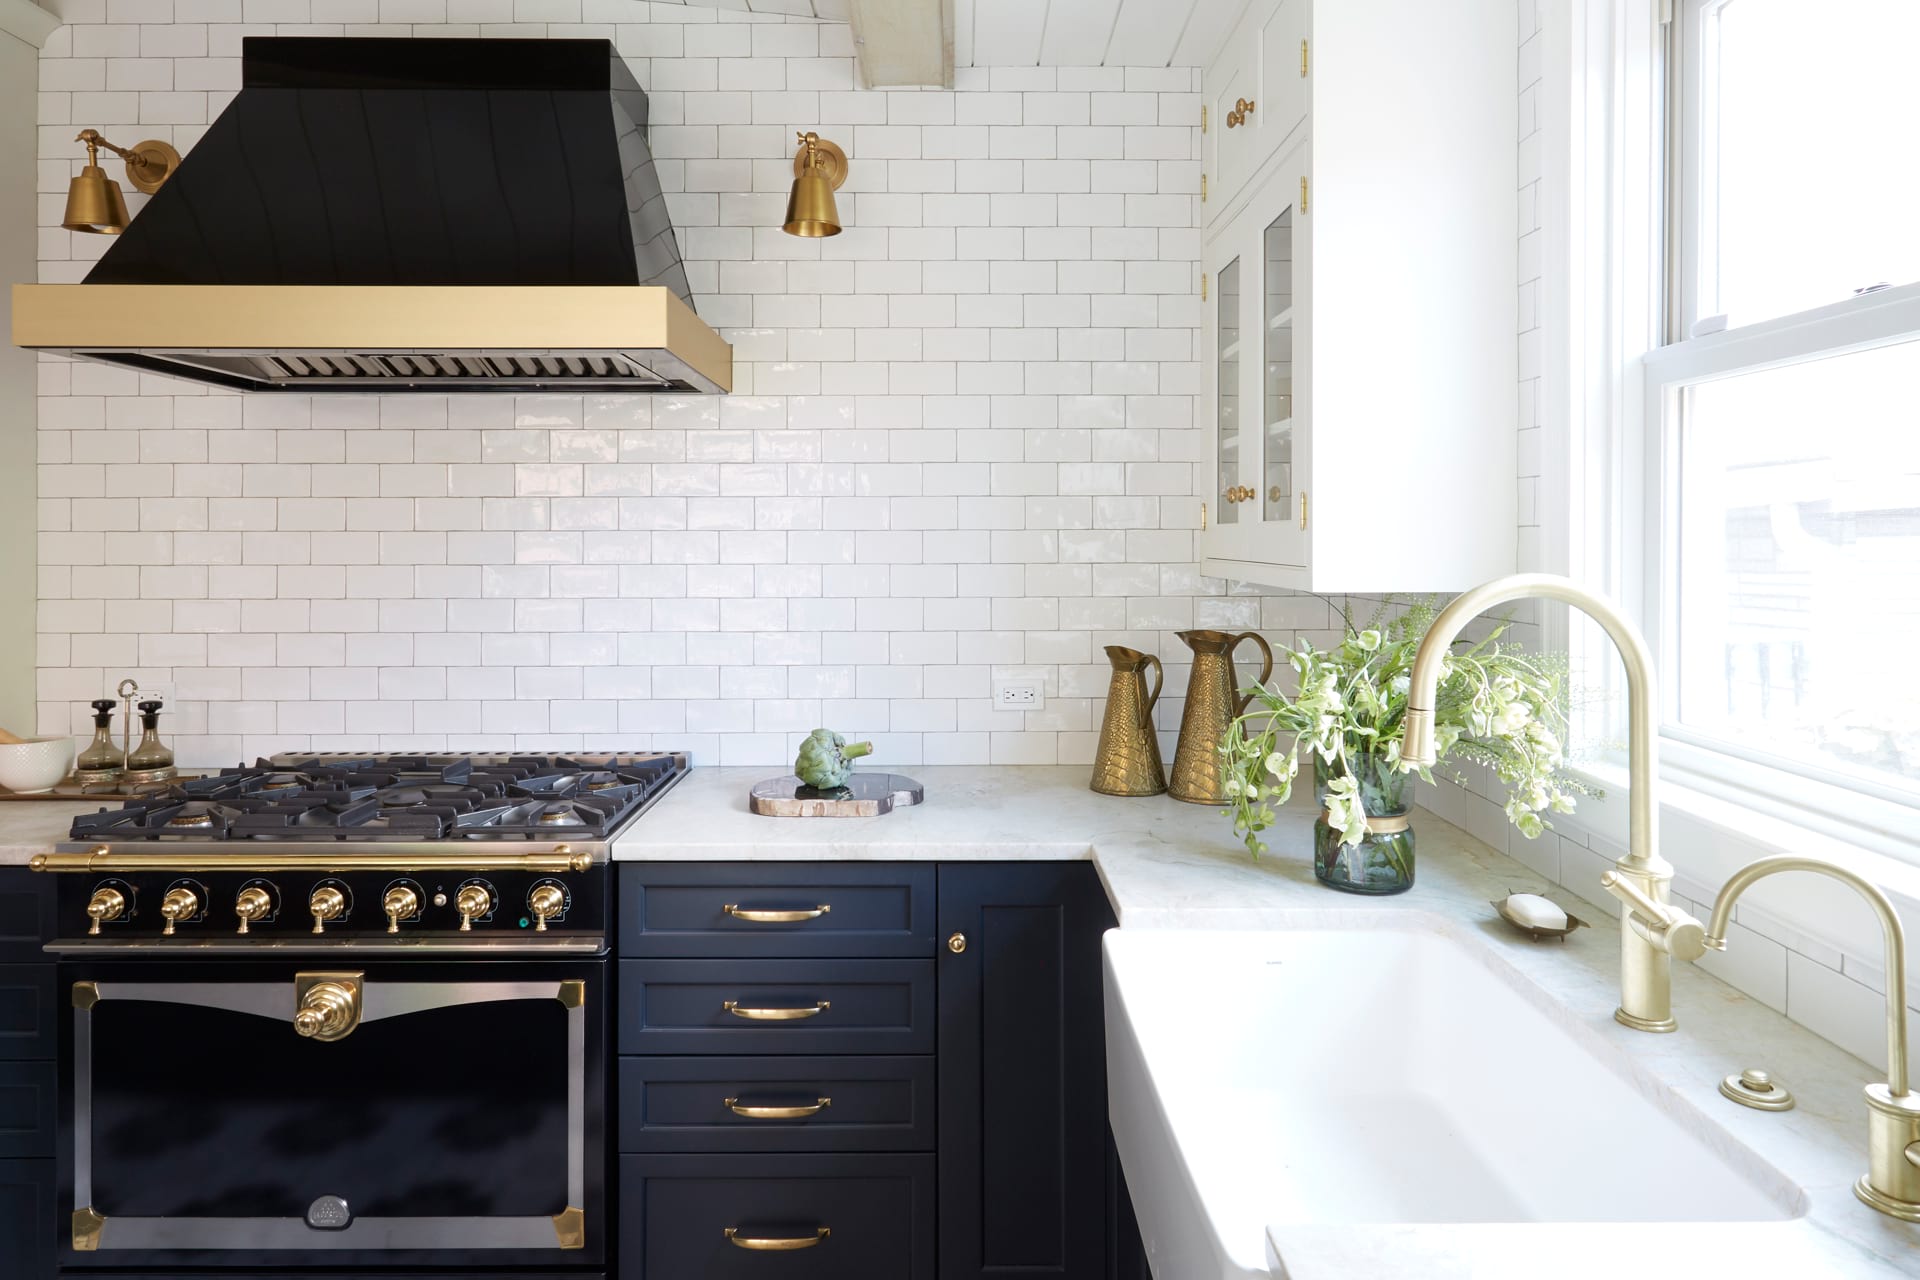 Beautiful kitchen design with white subway tiles on walls